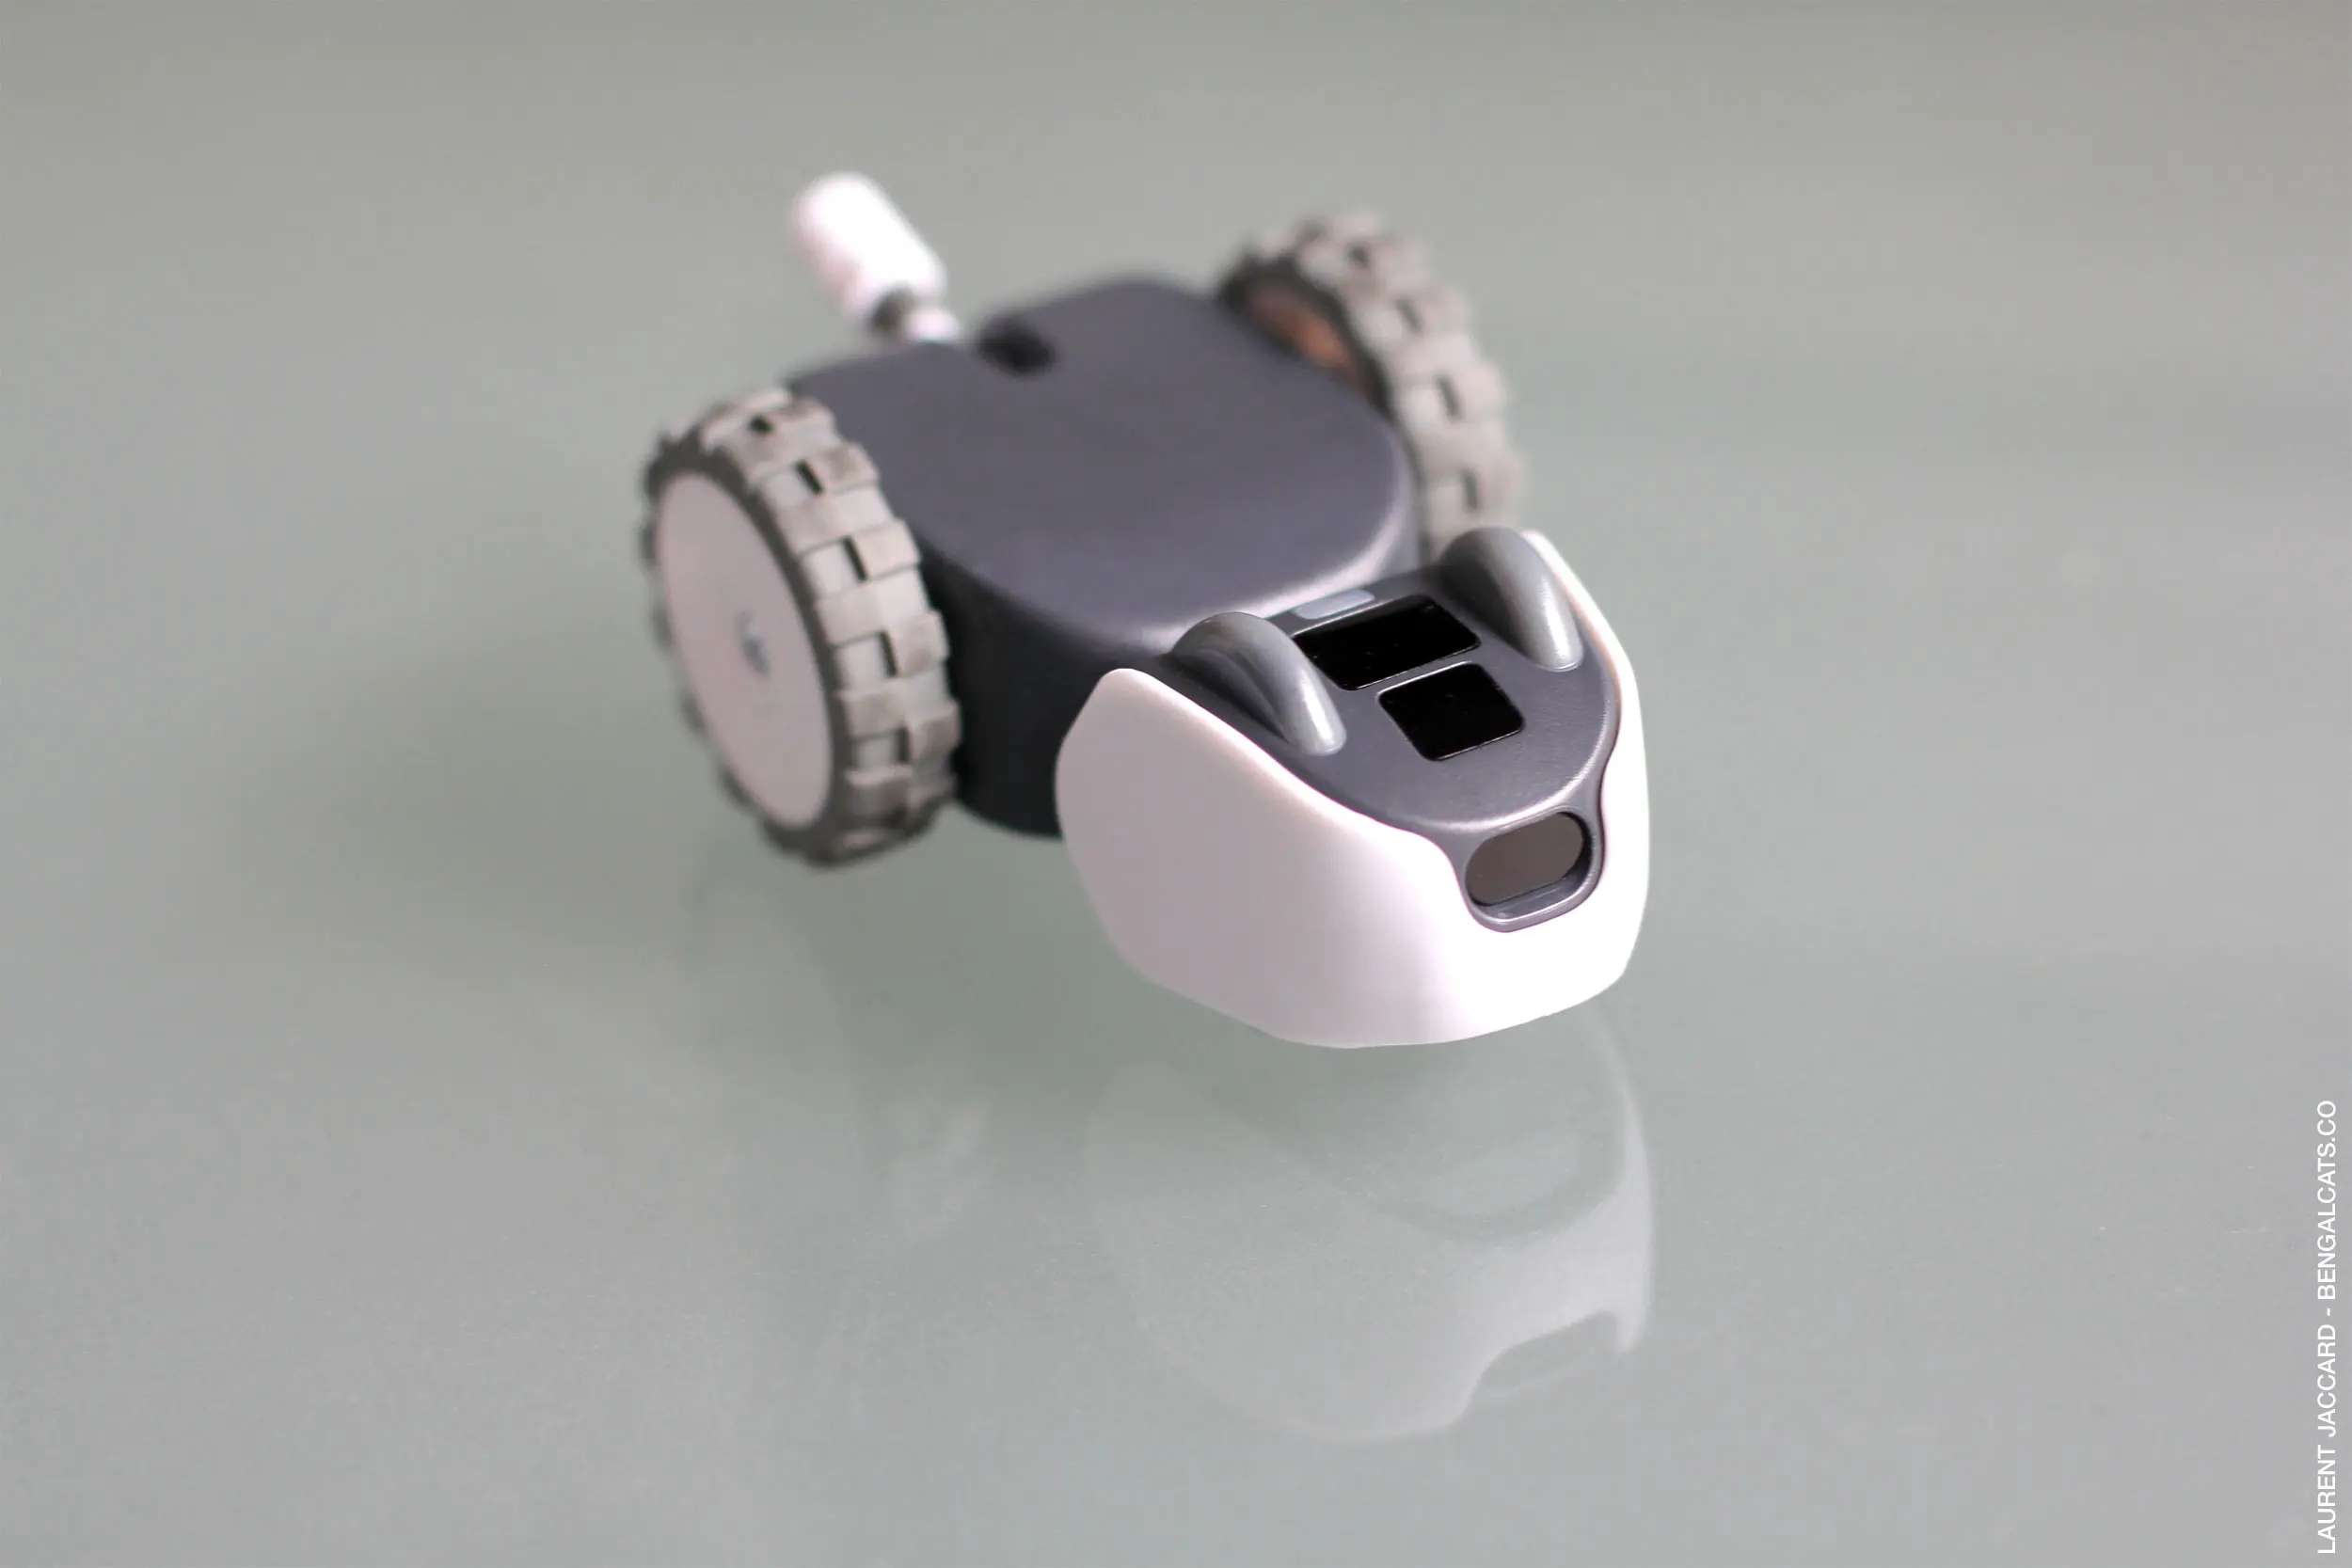 Closeup of the Mousr robot cat toy